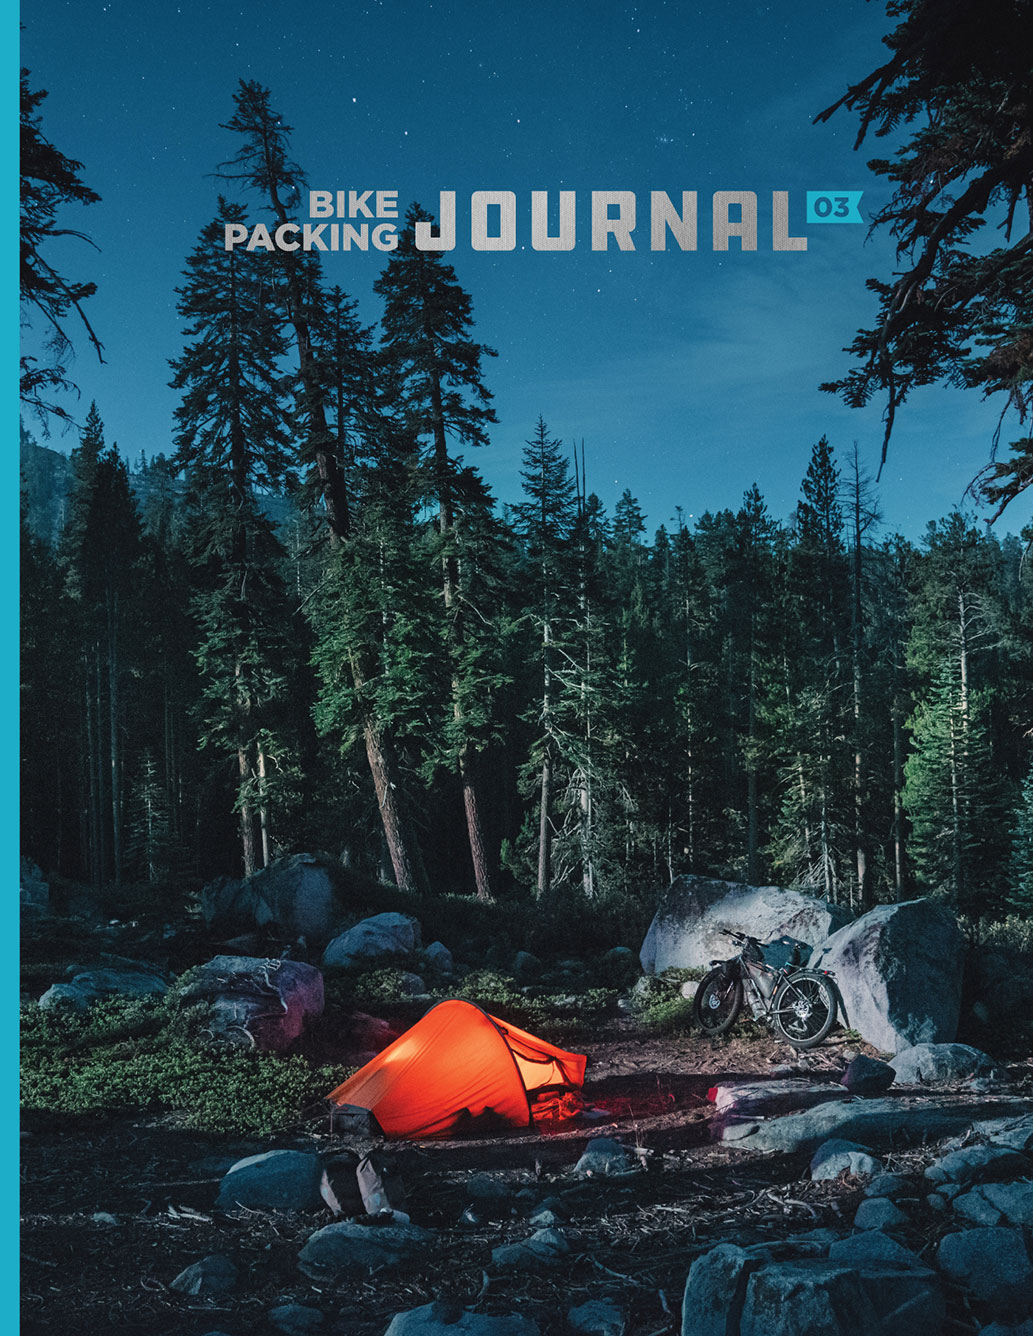 Bikepacking Journal Issue 03